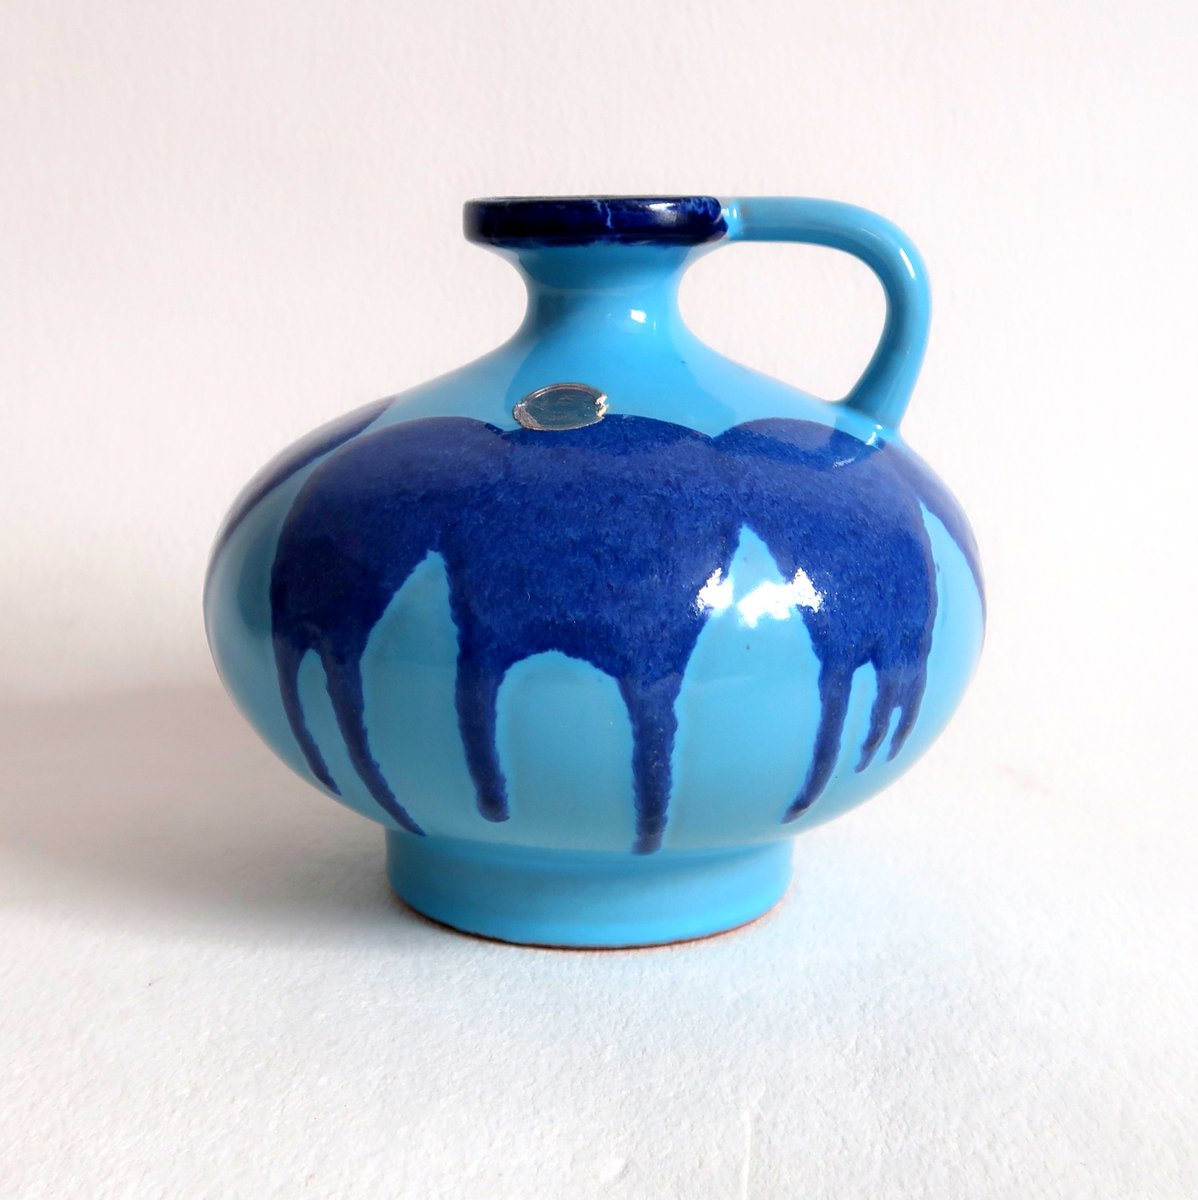 etsy.com/se-en/listing/…
VEB Haldensleben vase 4080A, vintage East German art ceramics
#midcenturymodern #haldensleben #etsytvintage #cherryforest #fatlava